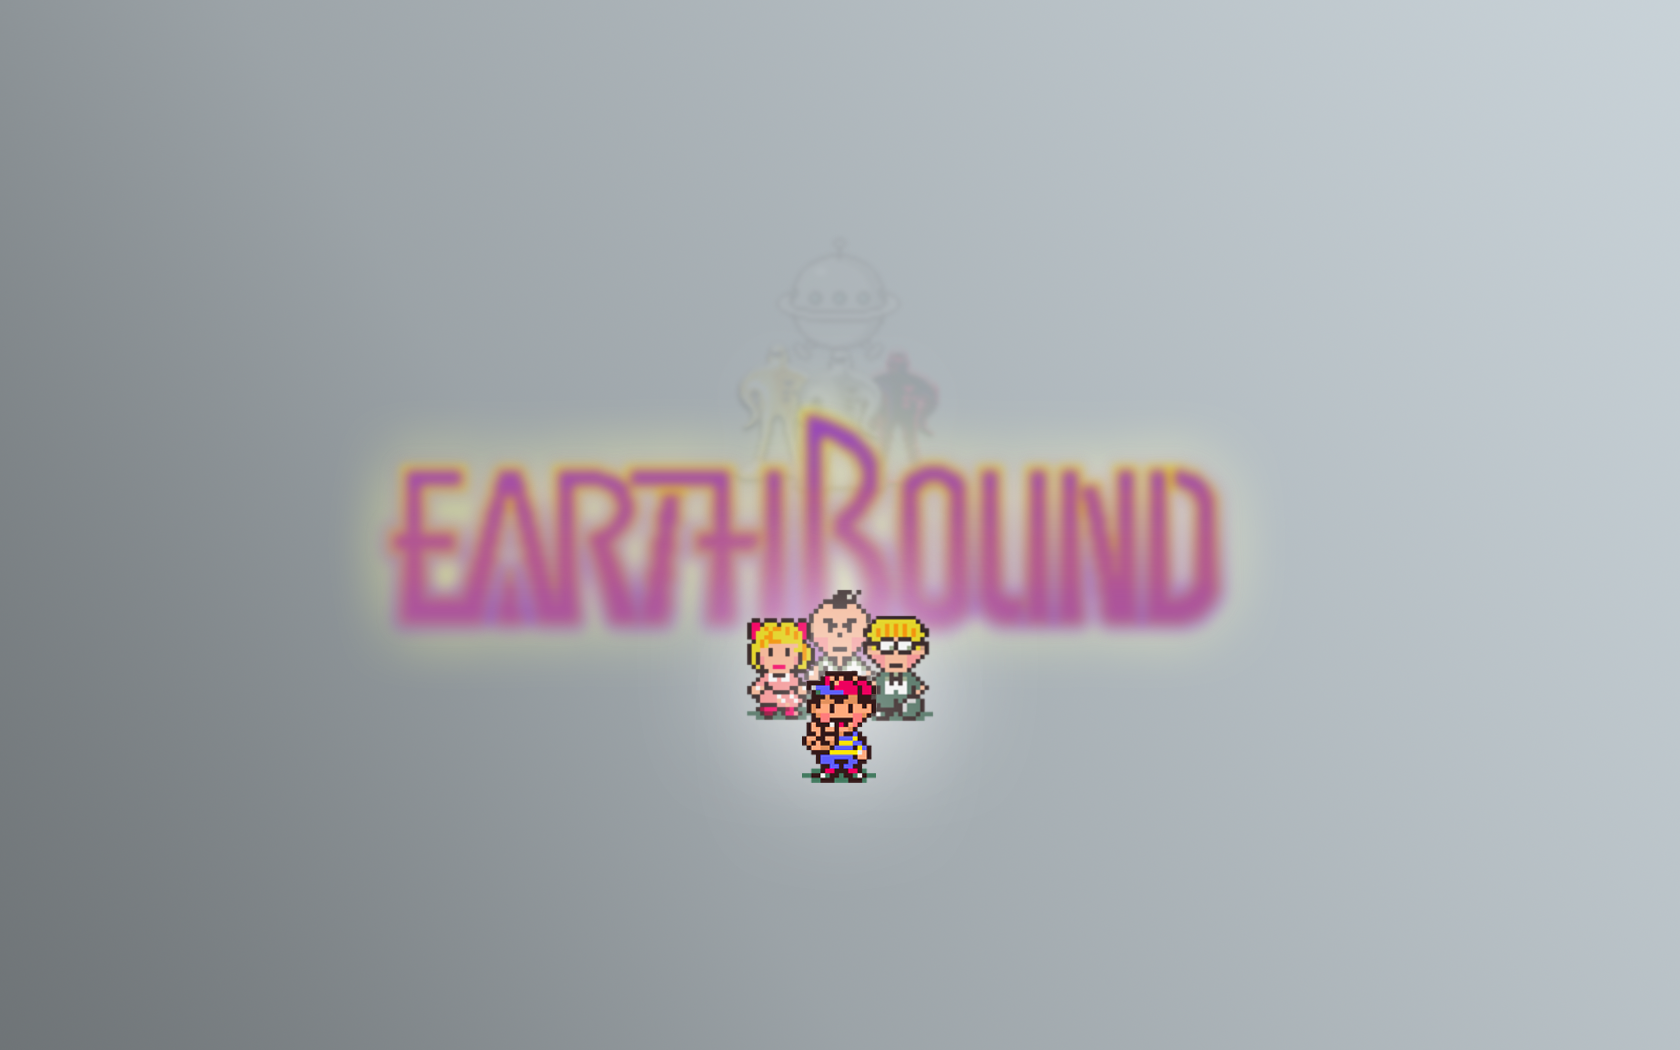 download earthbound origins